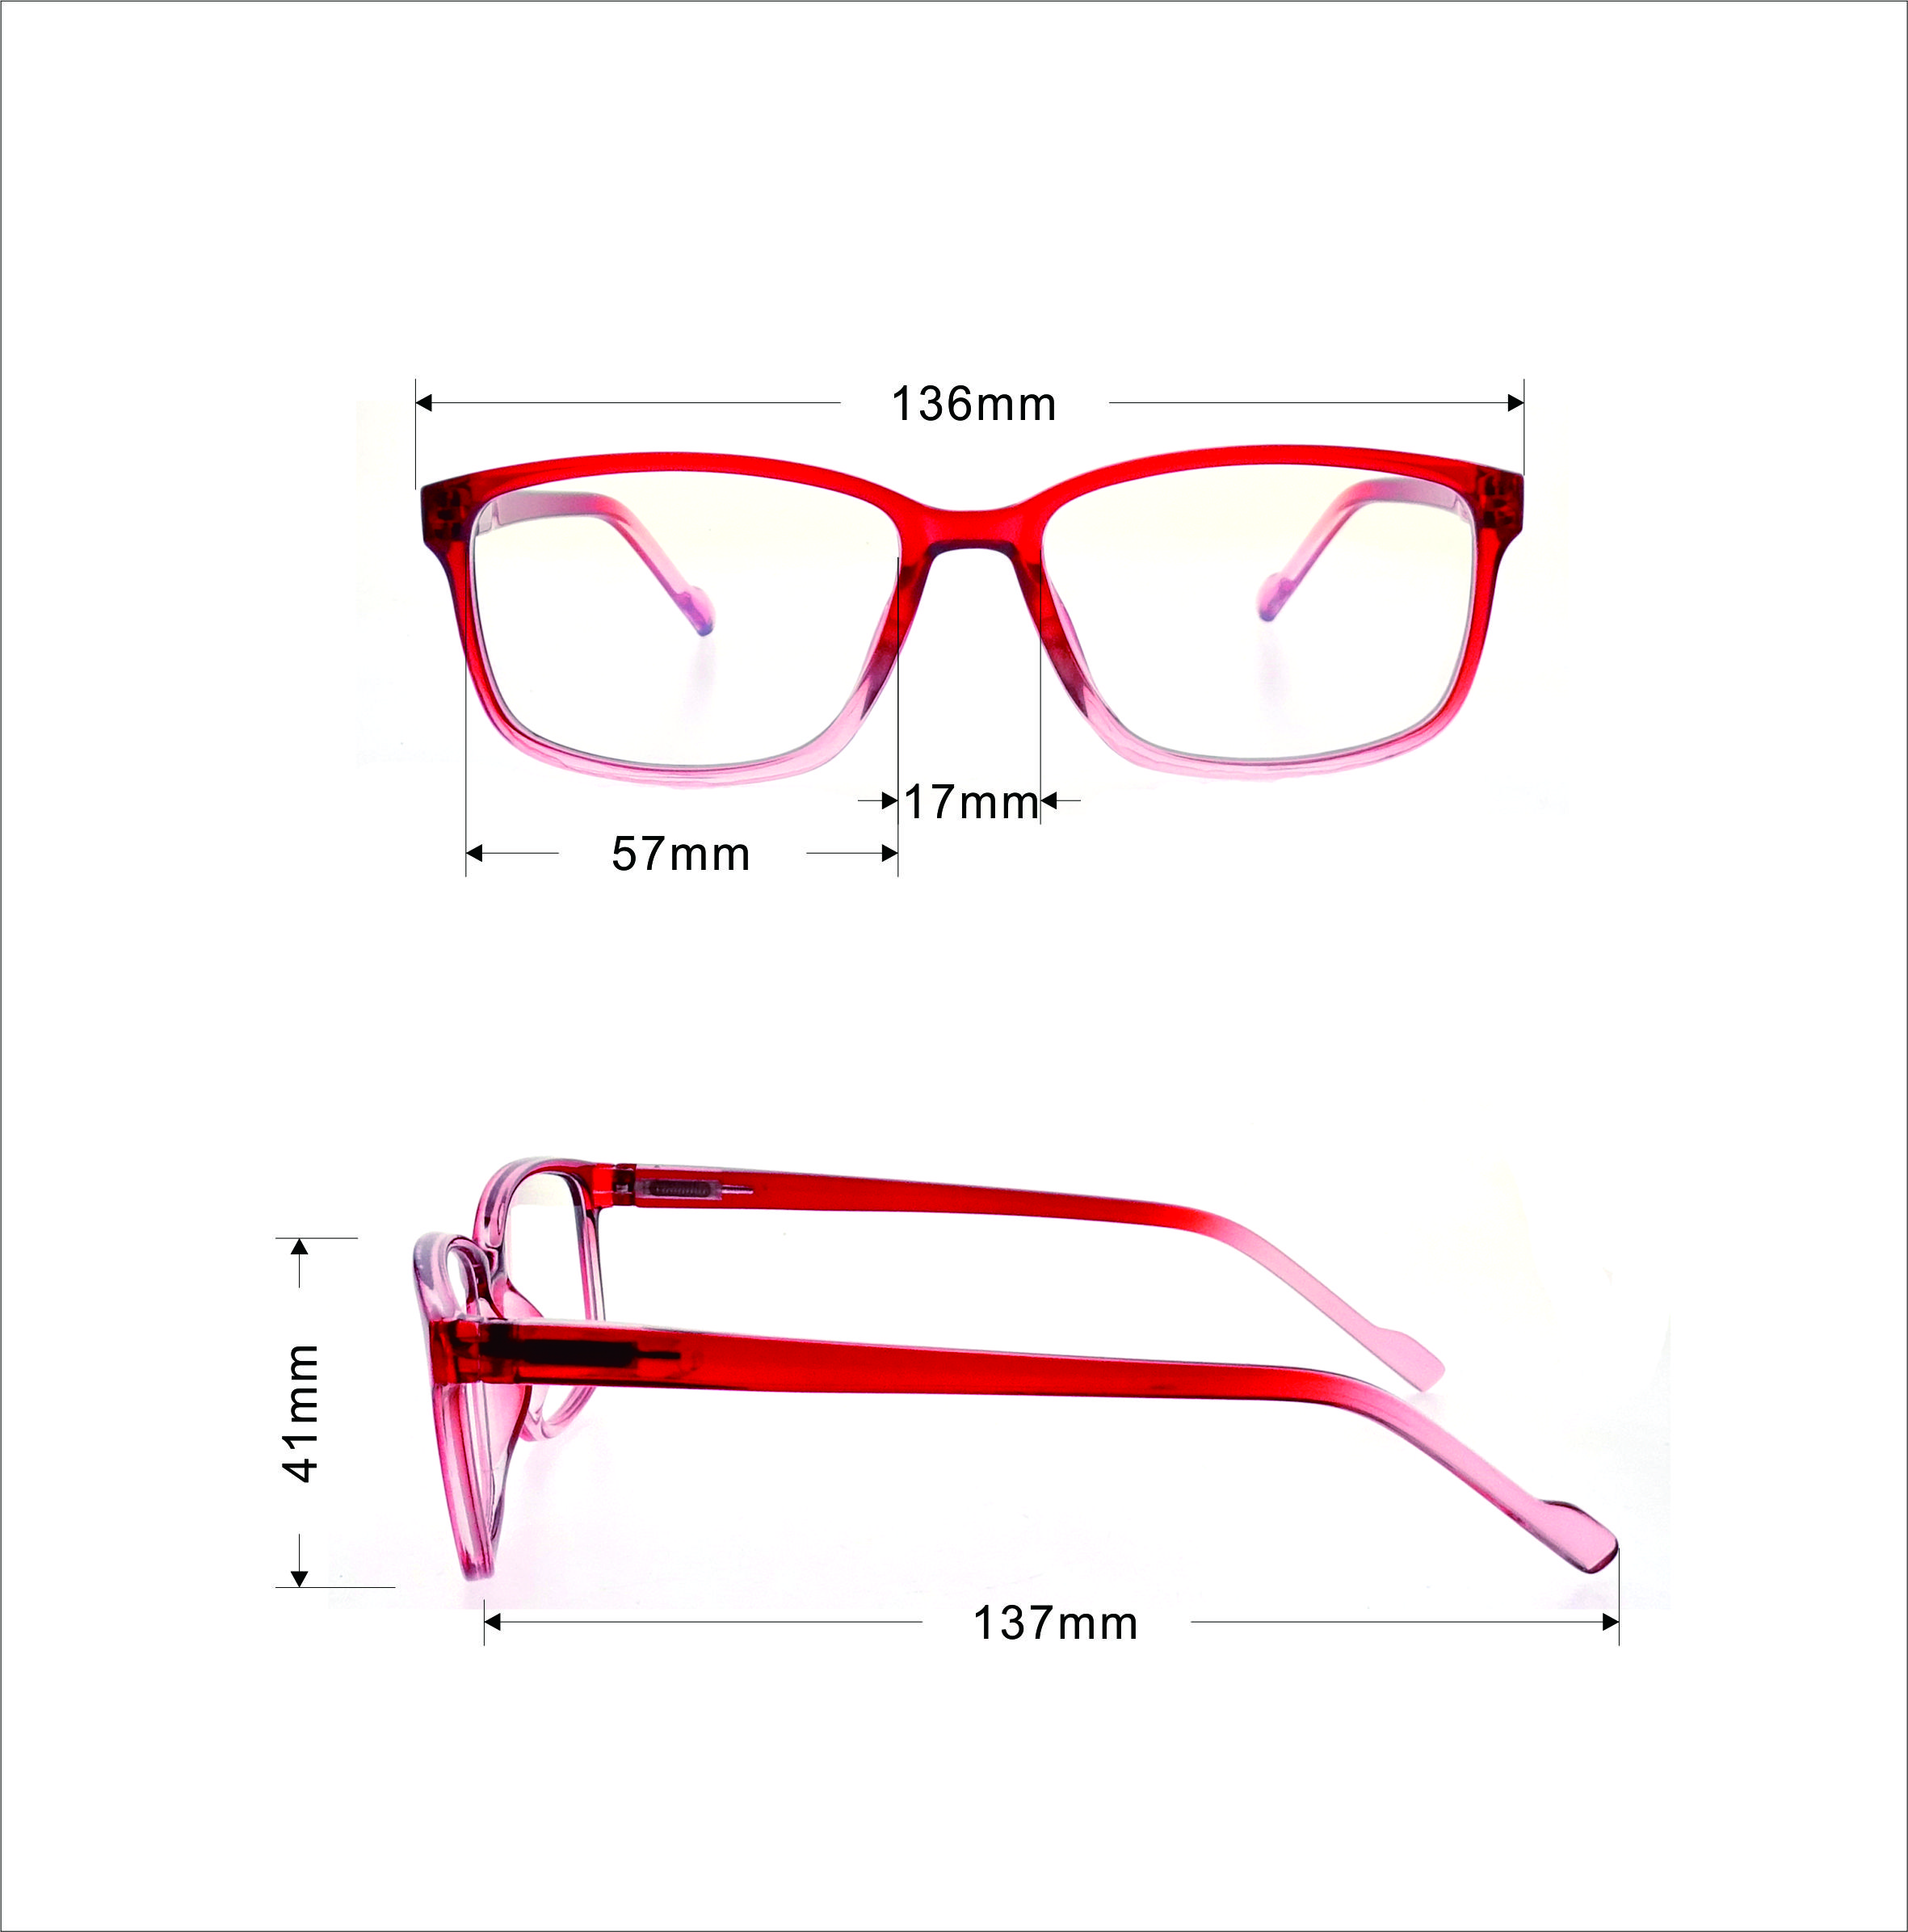 Eyewear Optical Frame Business Eyeglasses Rectangle Eyewear for Women Popular Glasses Flexible Spring Hinge LR-P6332